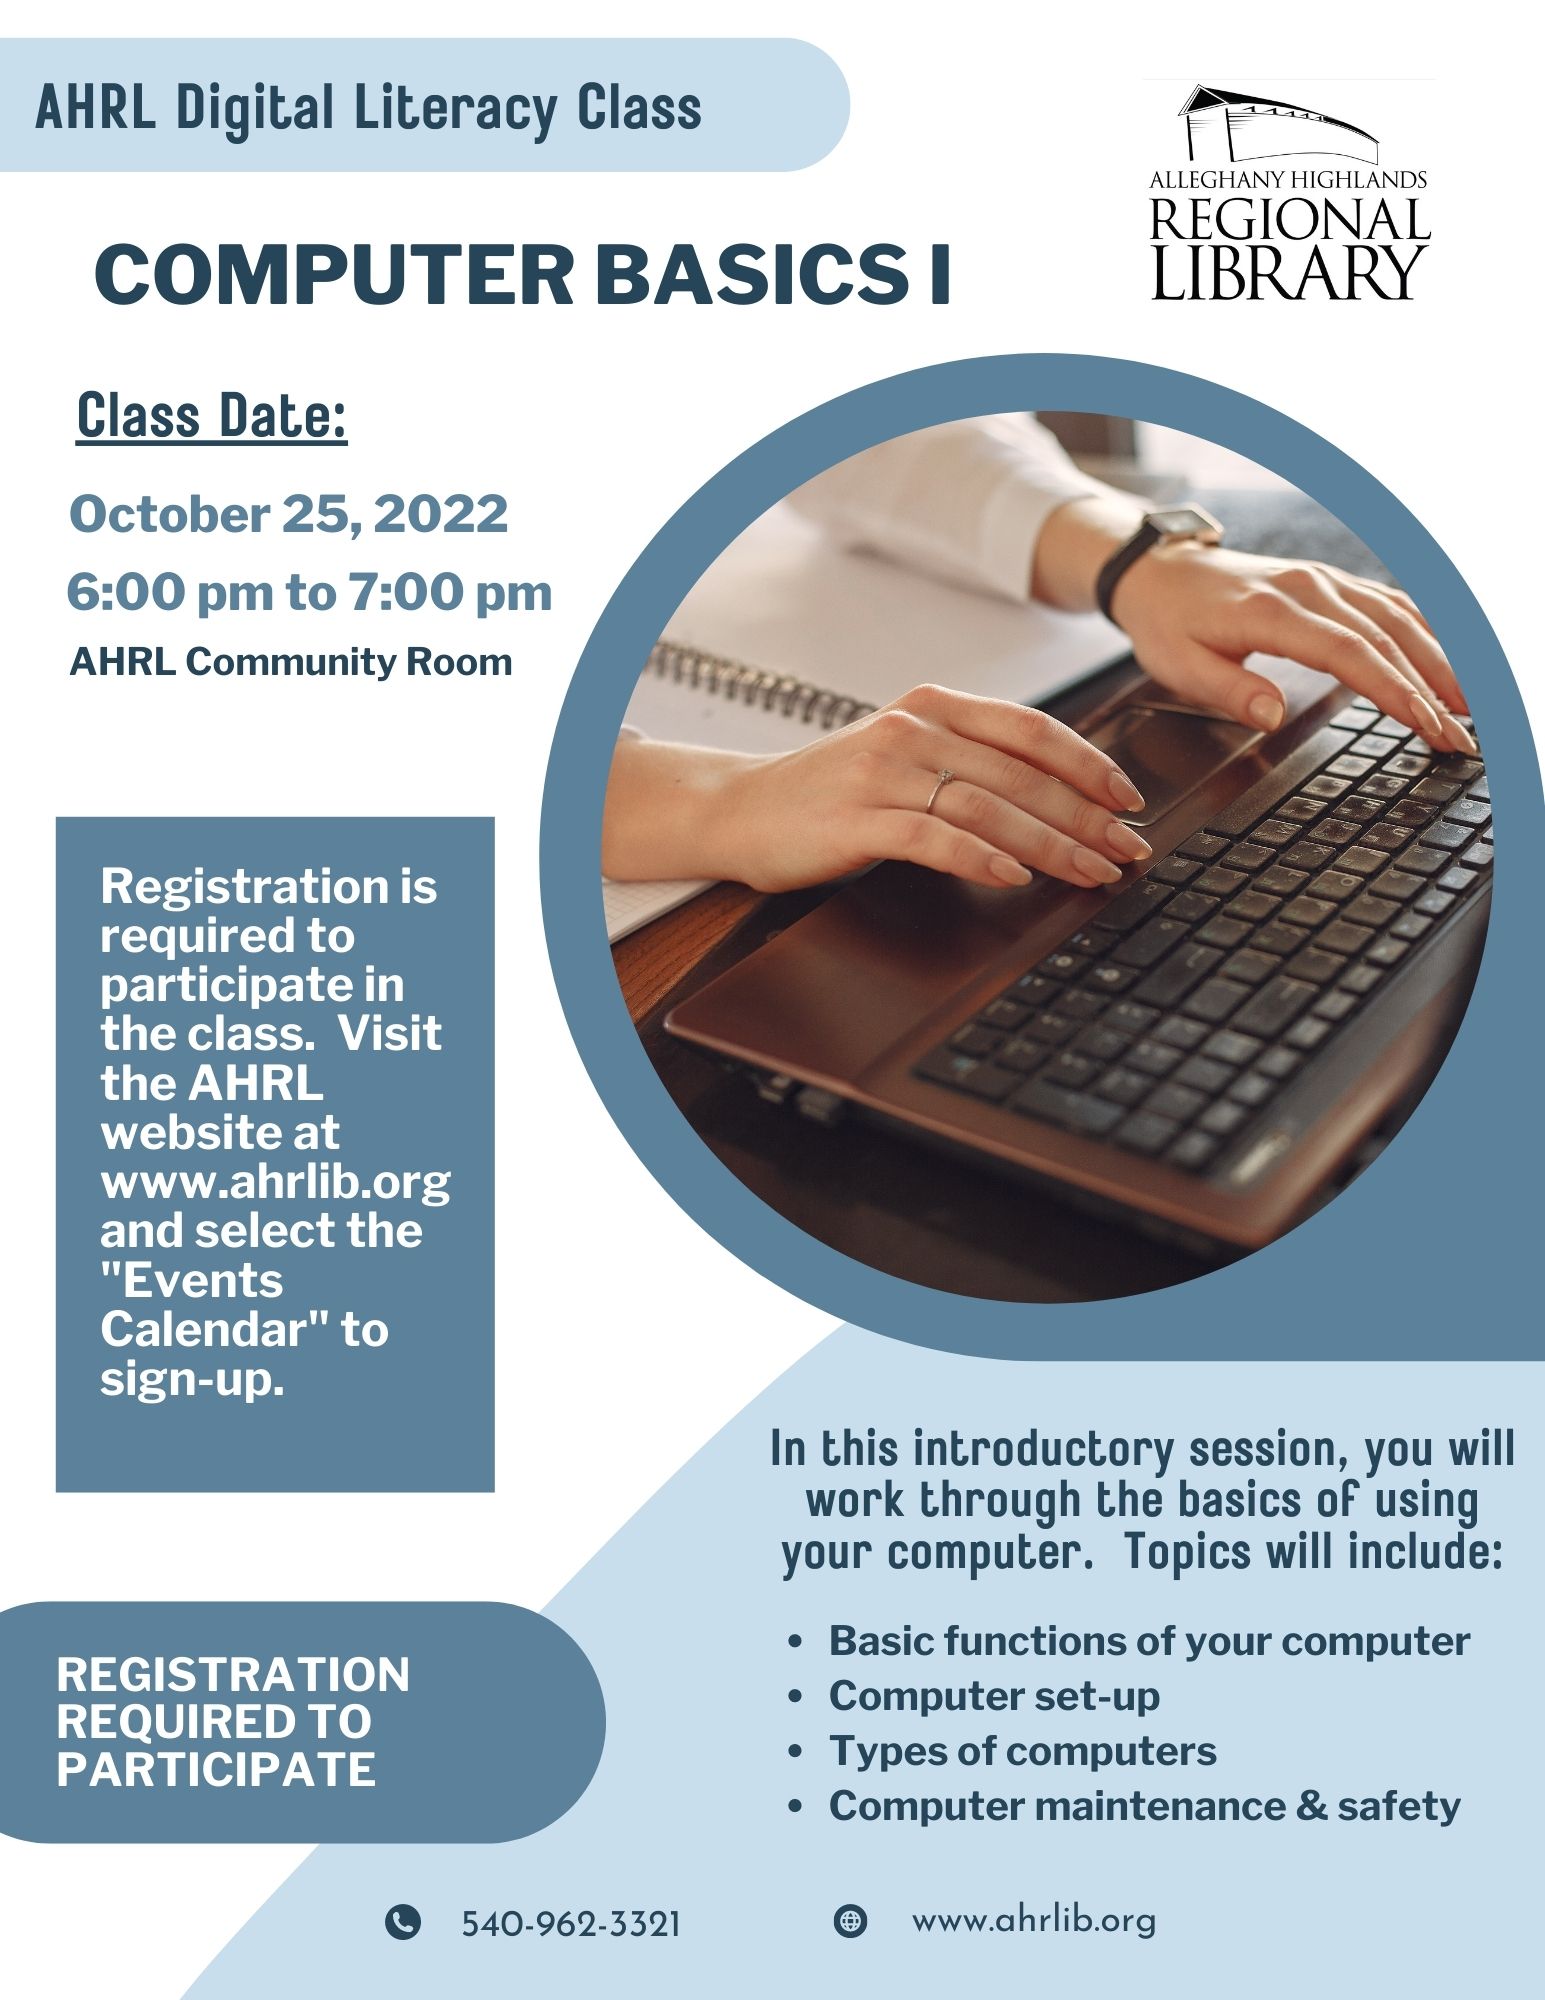 AHRL Digital Literacy Class Flyer--Computer Basics